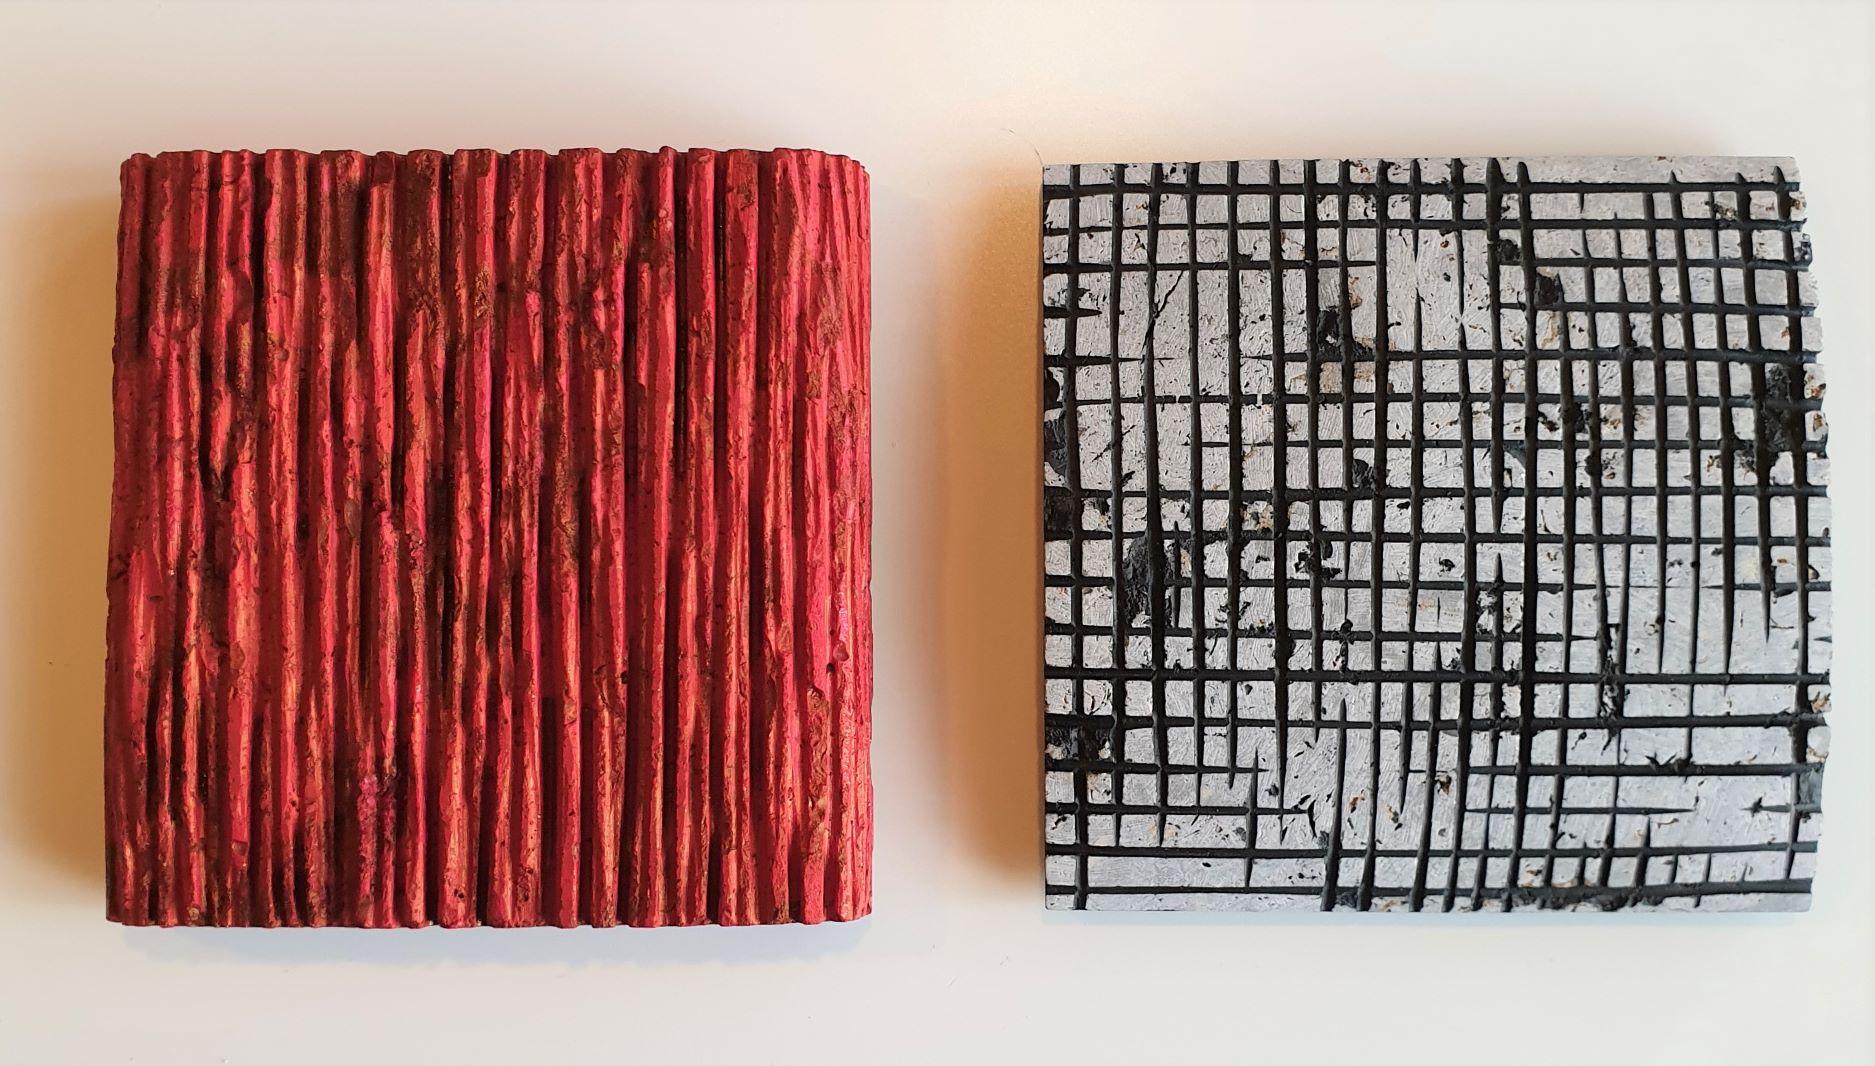 Dieter Kränzlein Abstract Sculpture - Limestone red & blackwhite diptych - pair of contemporary modern wall sculptures